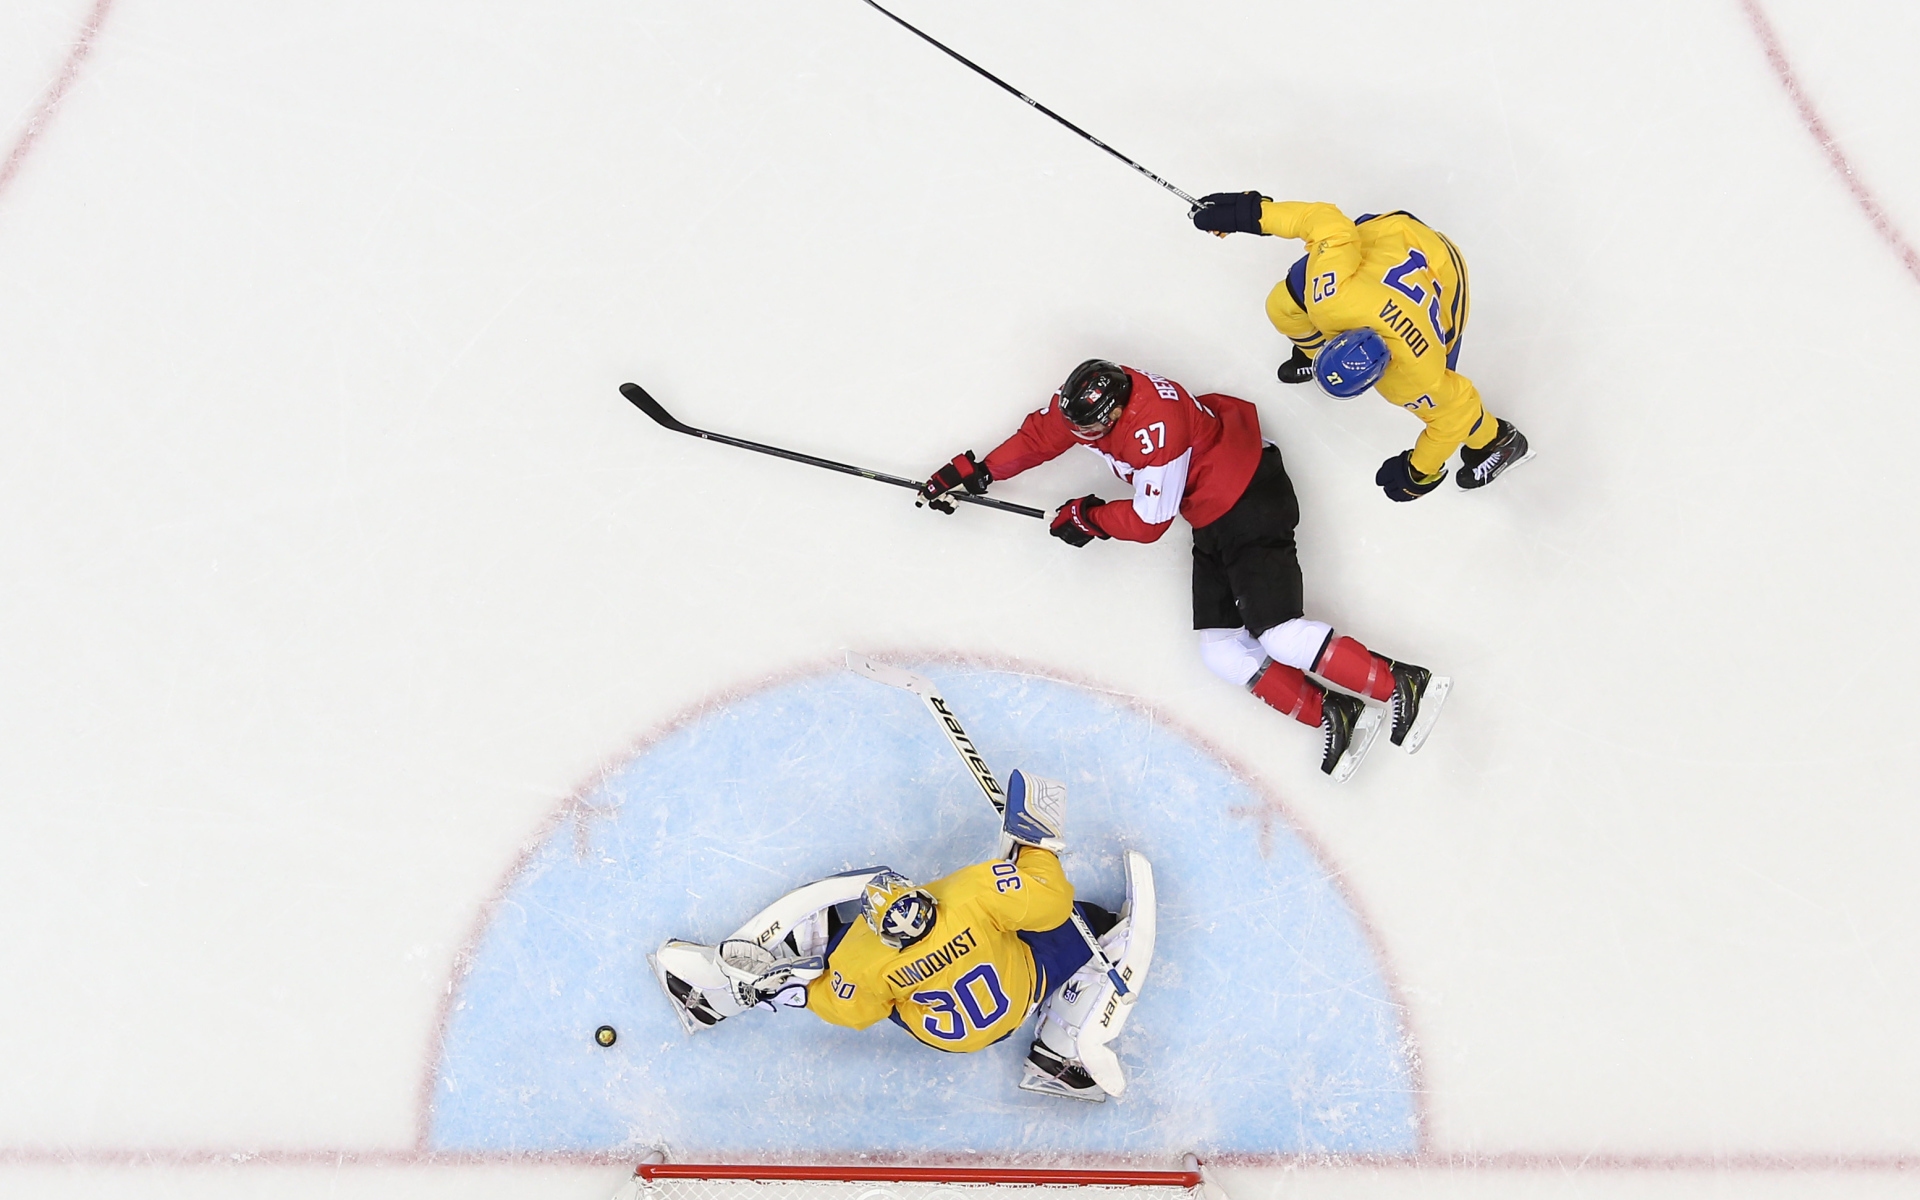 Winter Olympics in Sochi hockey team silver medal Sweden